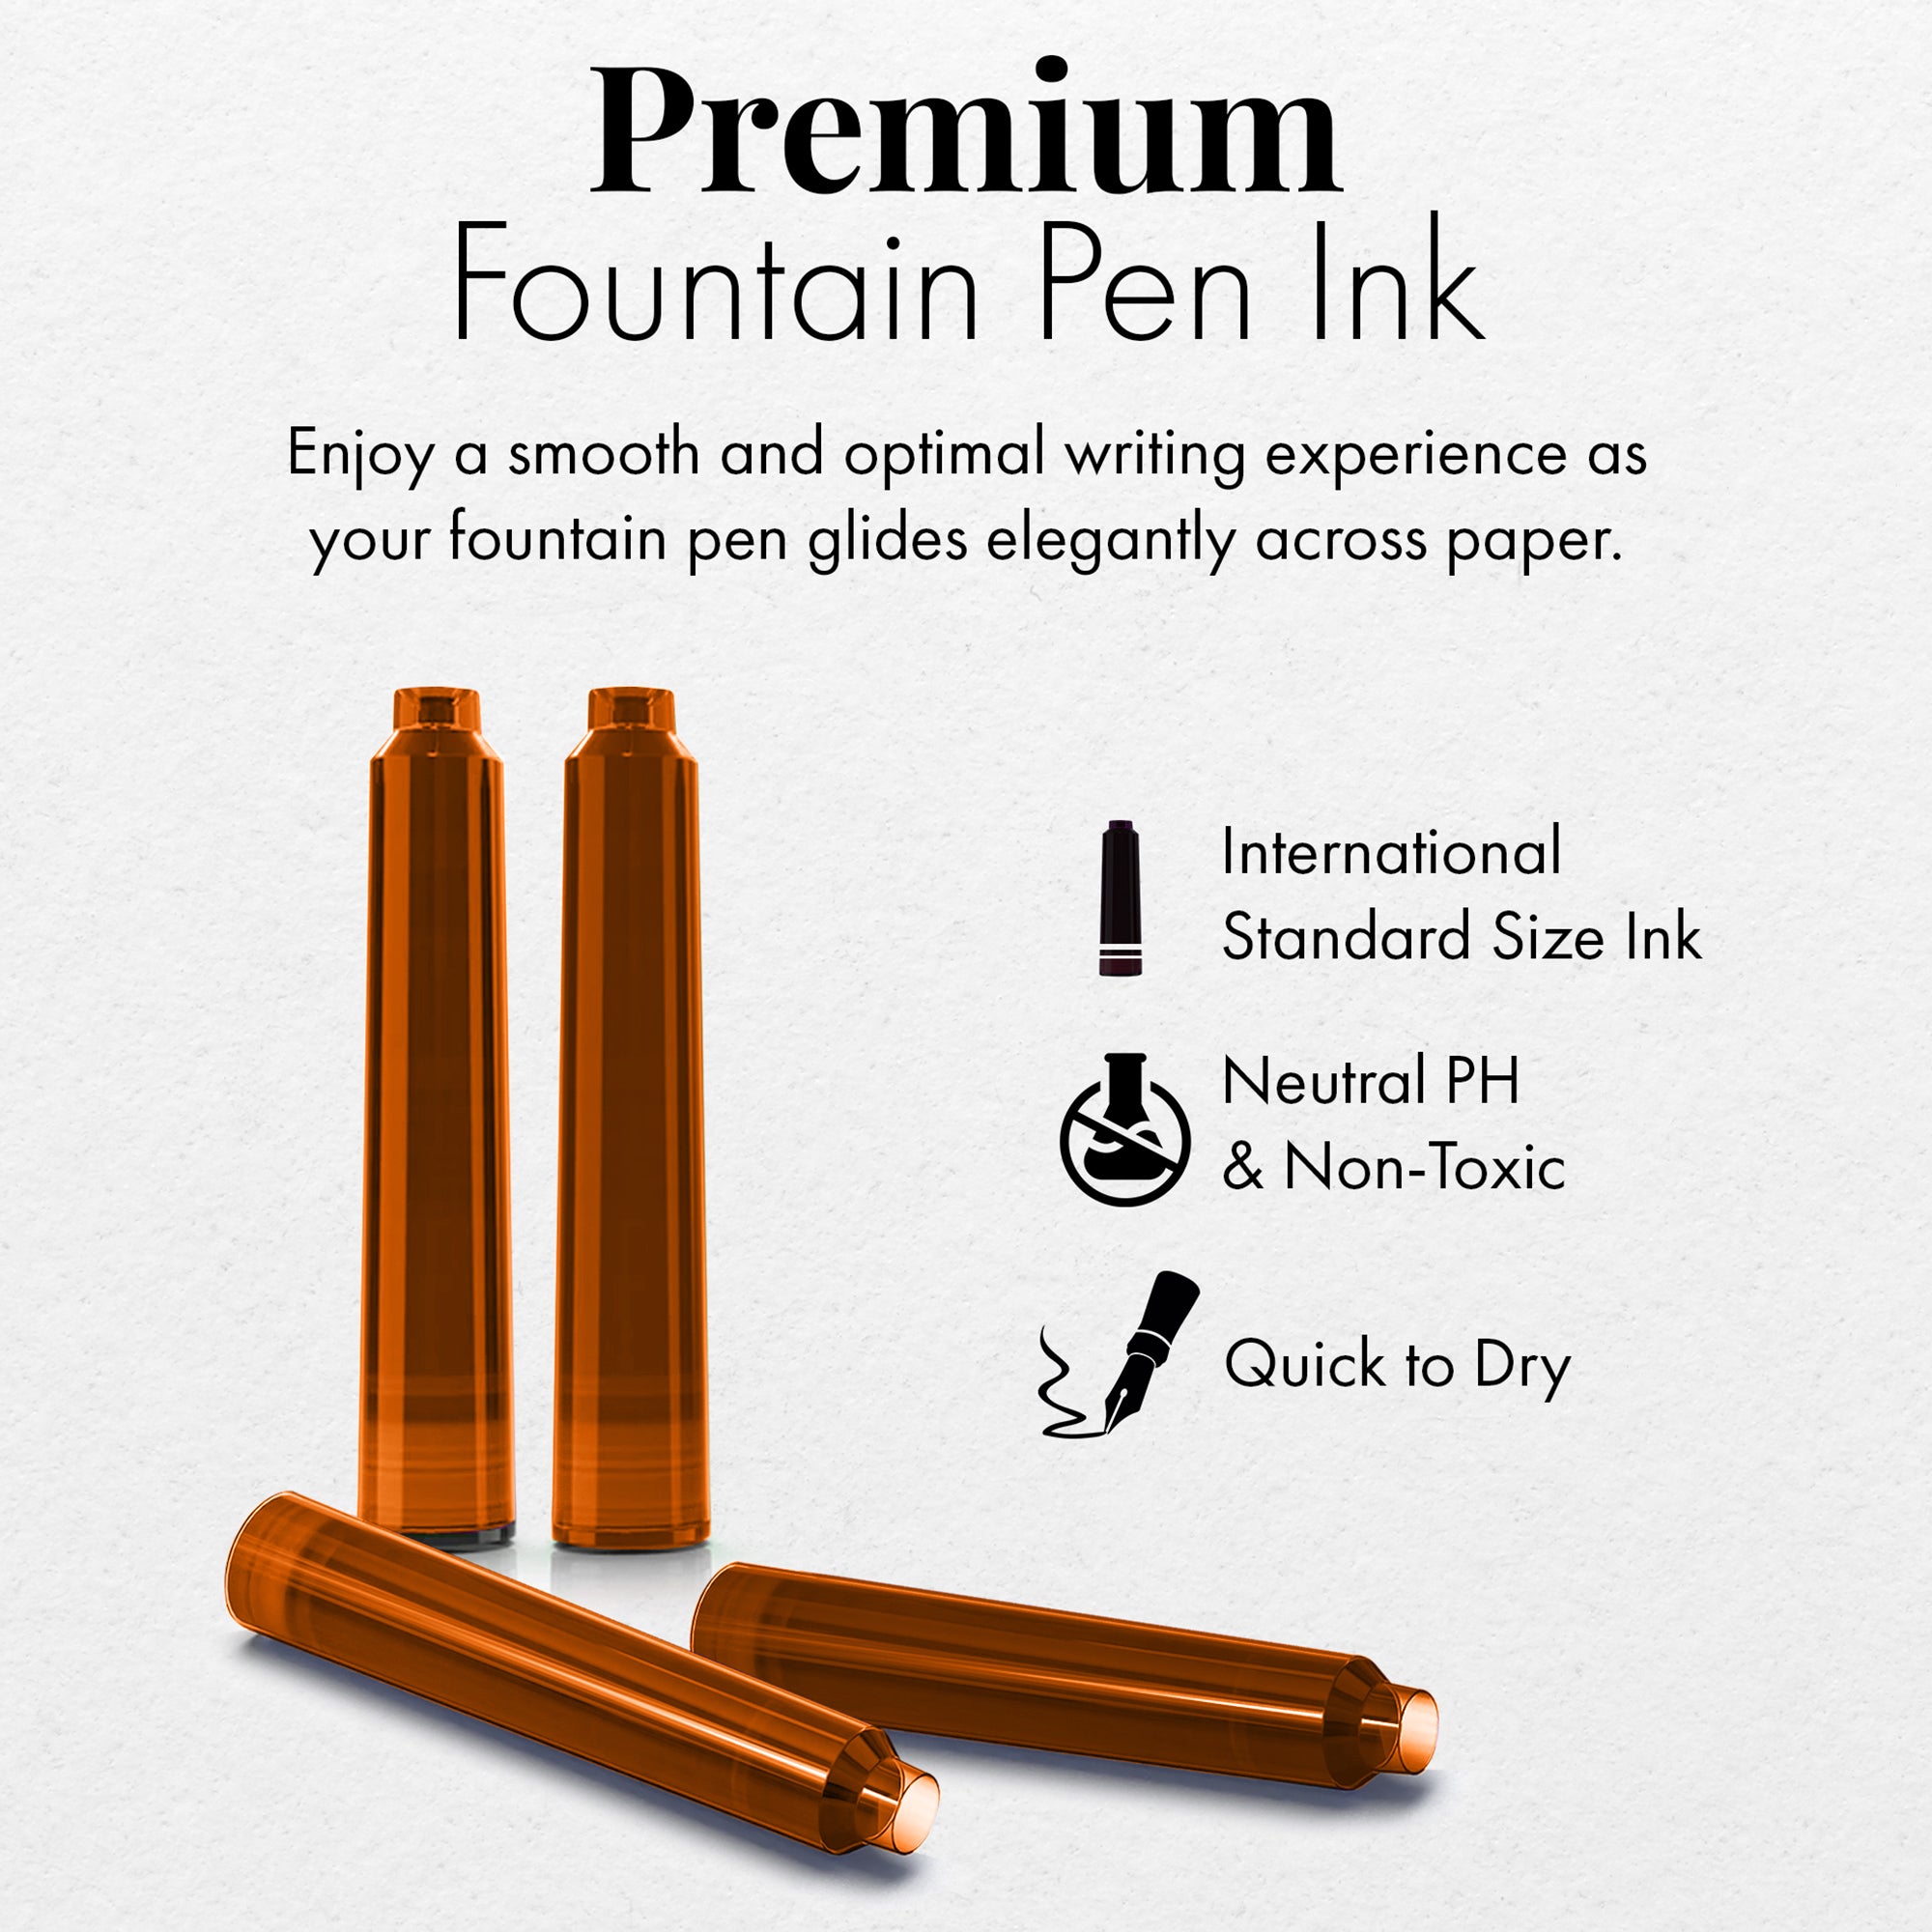 24 Pack Fountain Pen Ink Refills